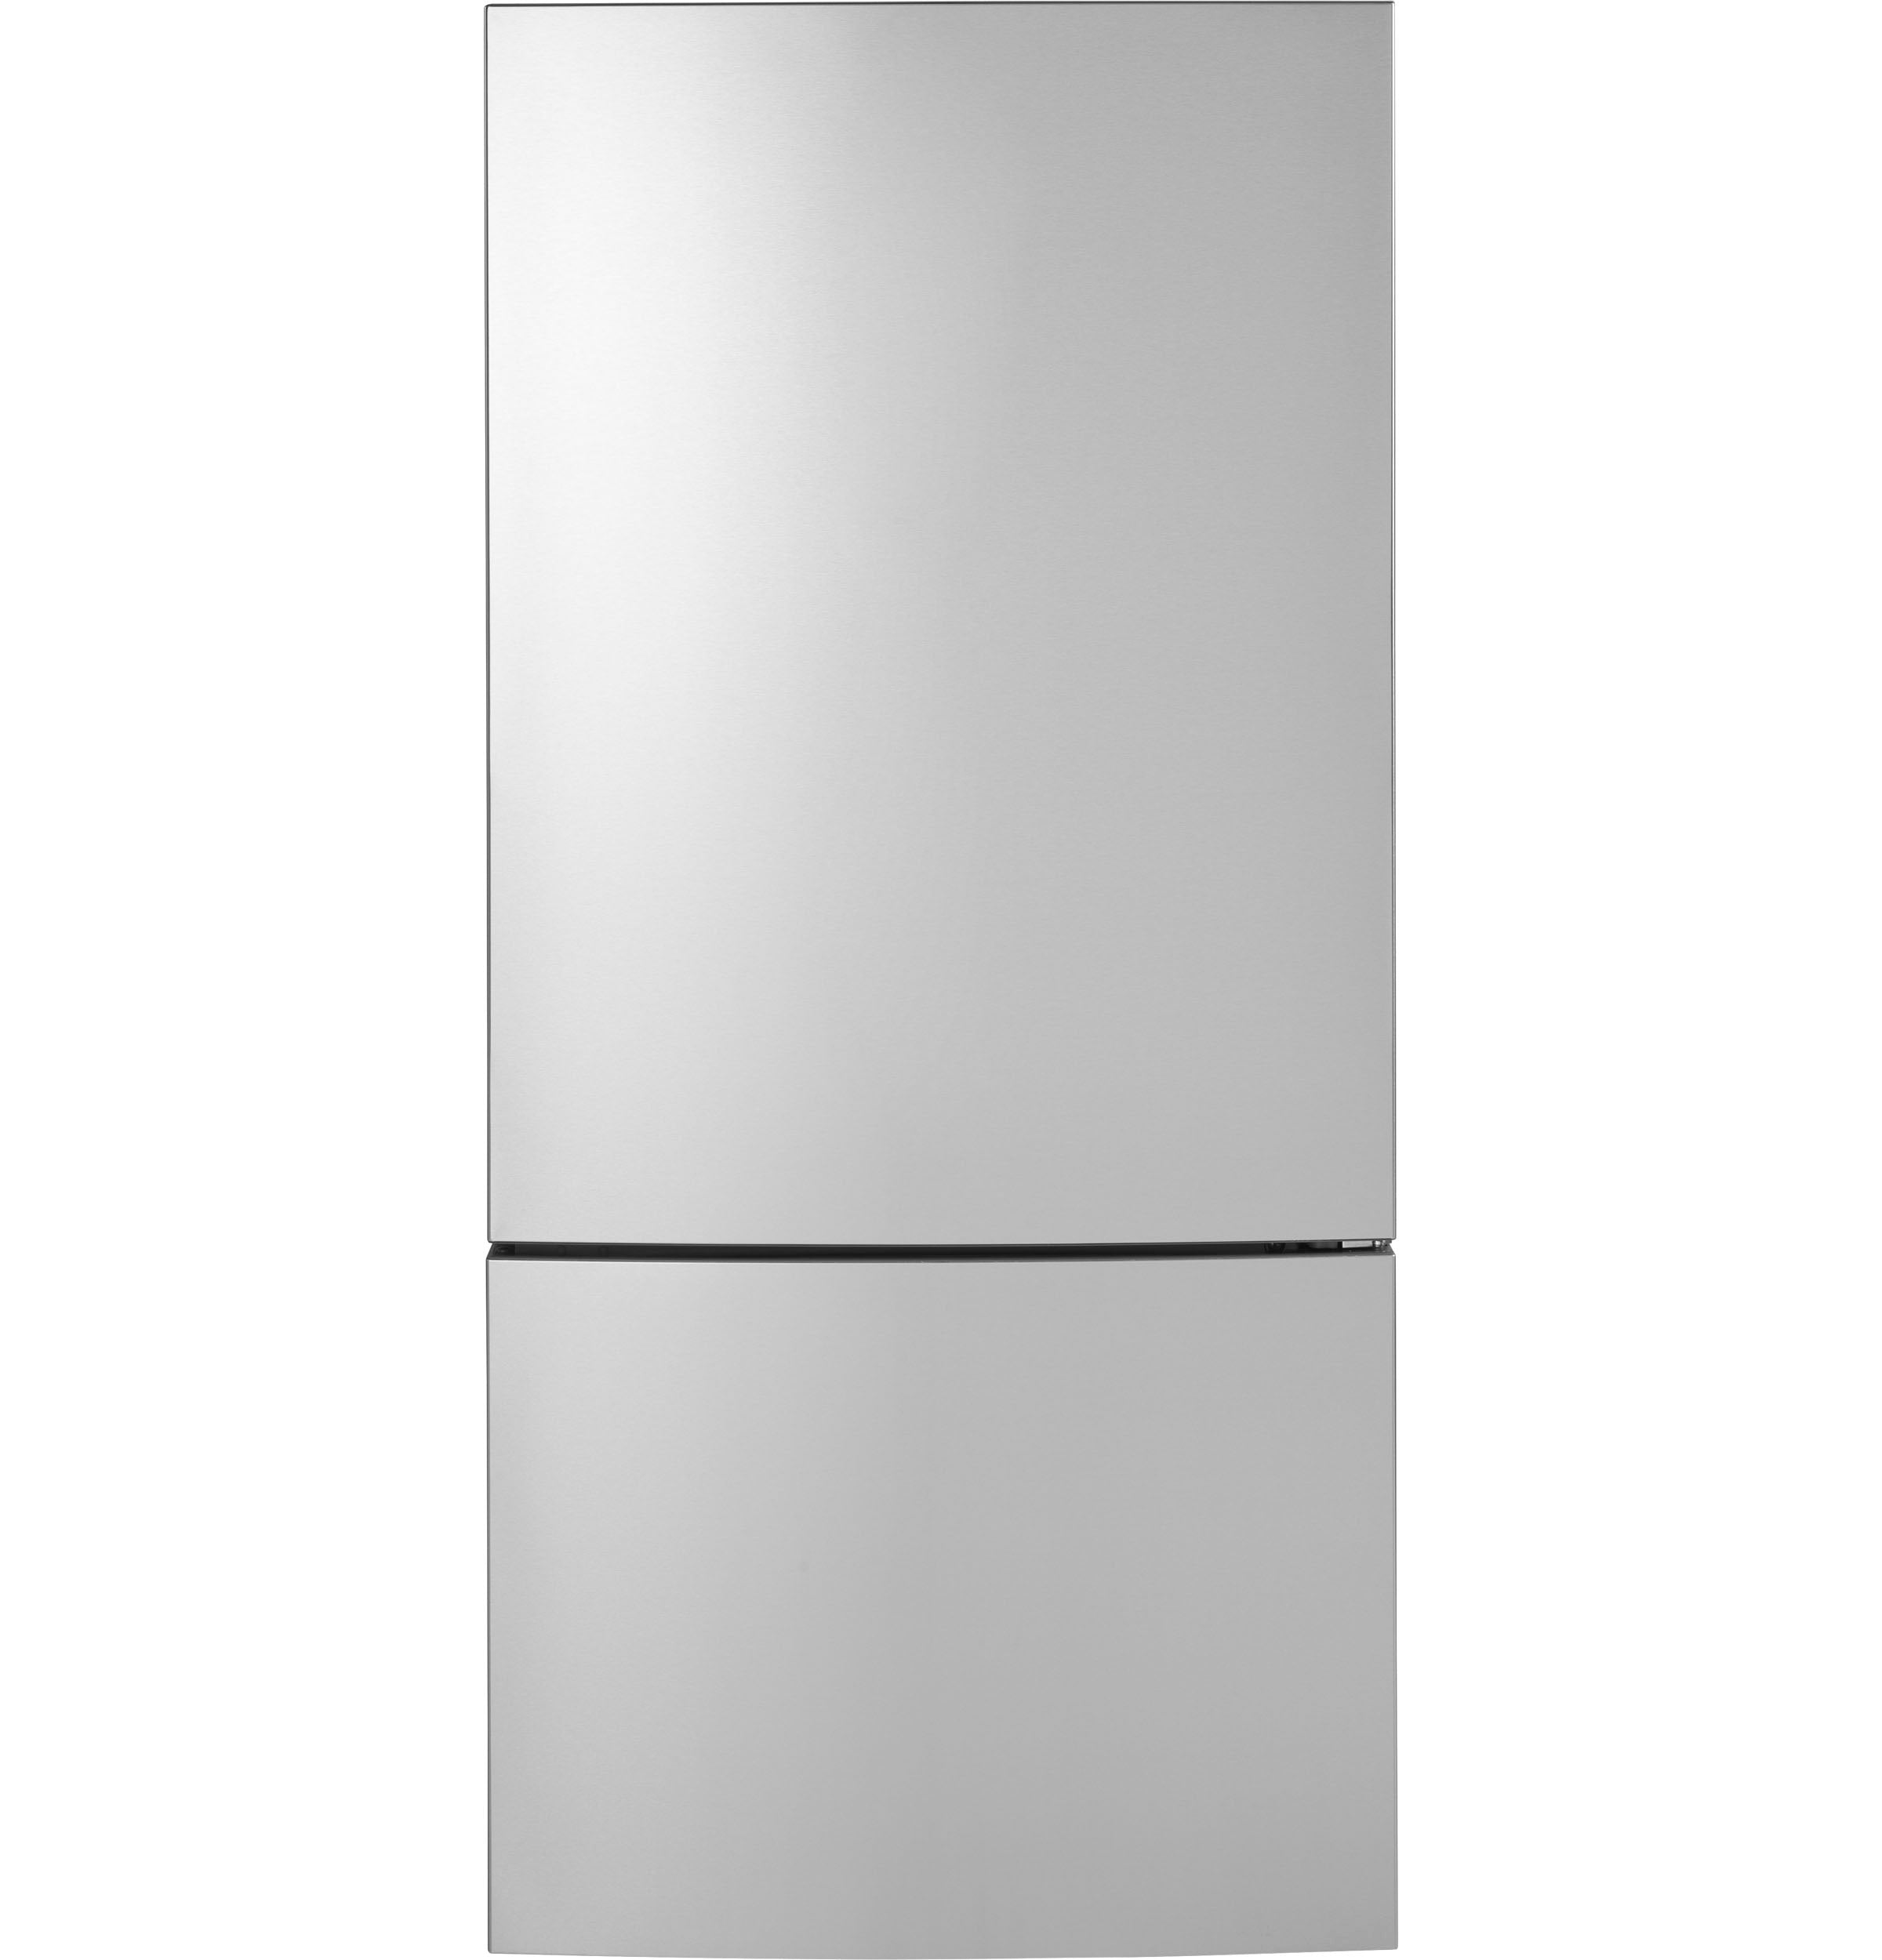 GE - 31.1 Inch 17.7 cu. ft Bottom Mount Refrigerator in Stainless - GBE17HYRFS